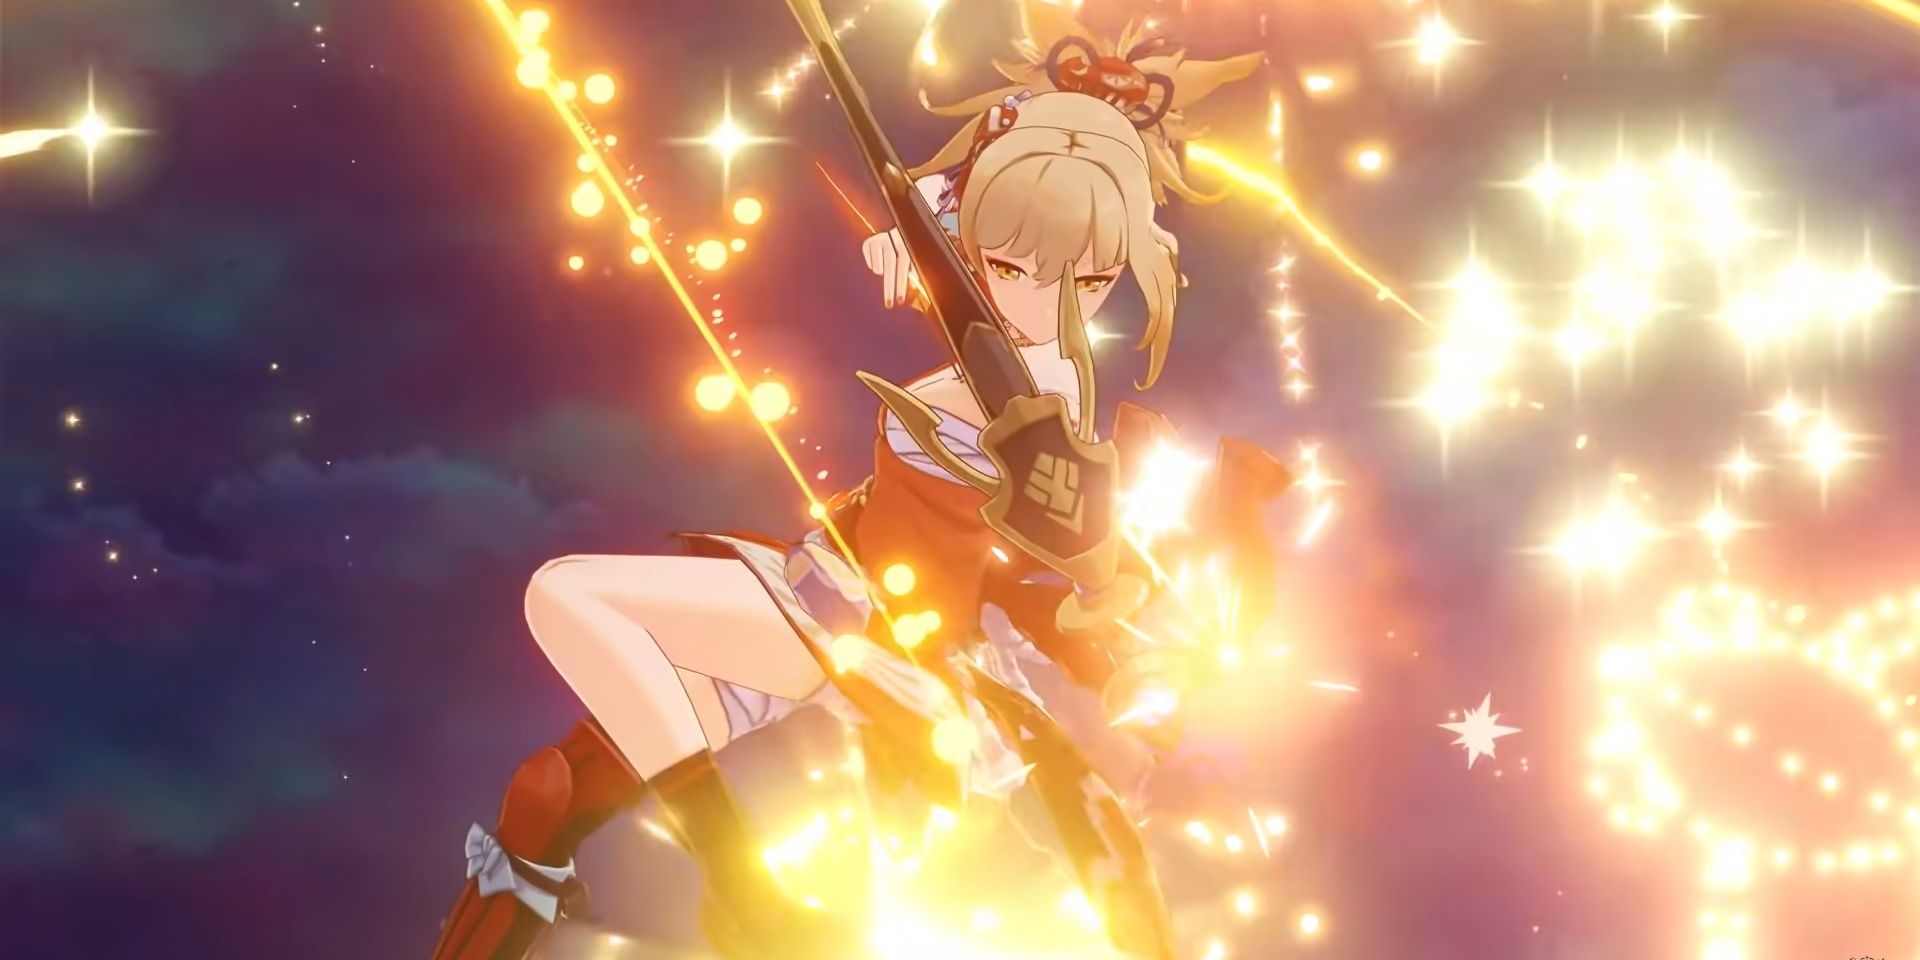 Genshin Impact Yoimiya Burst animation fireworks